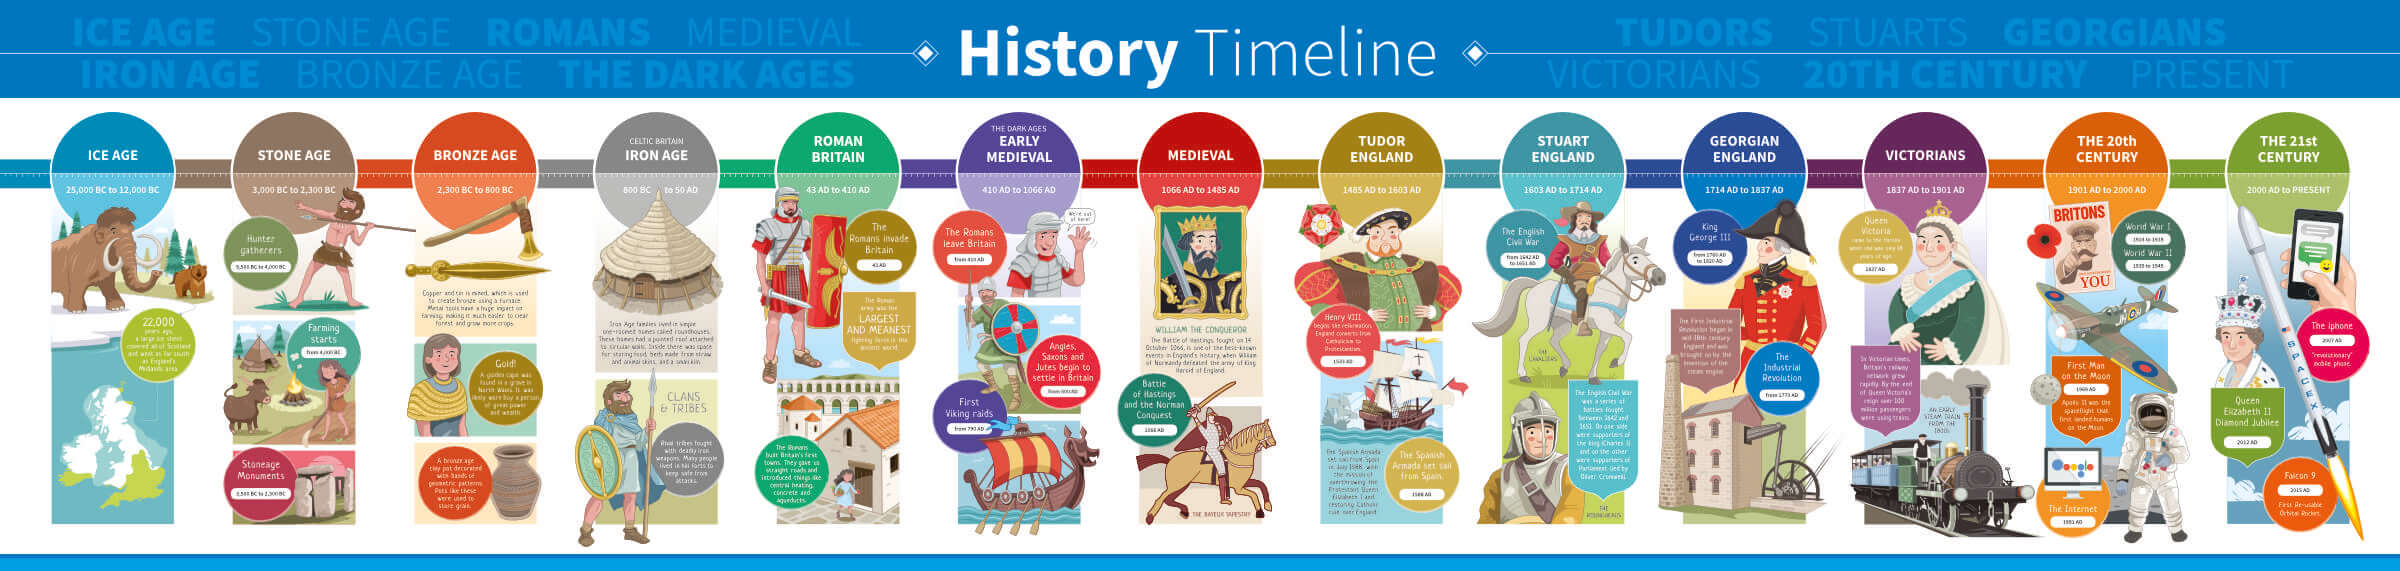 primary homework help timeline of british history